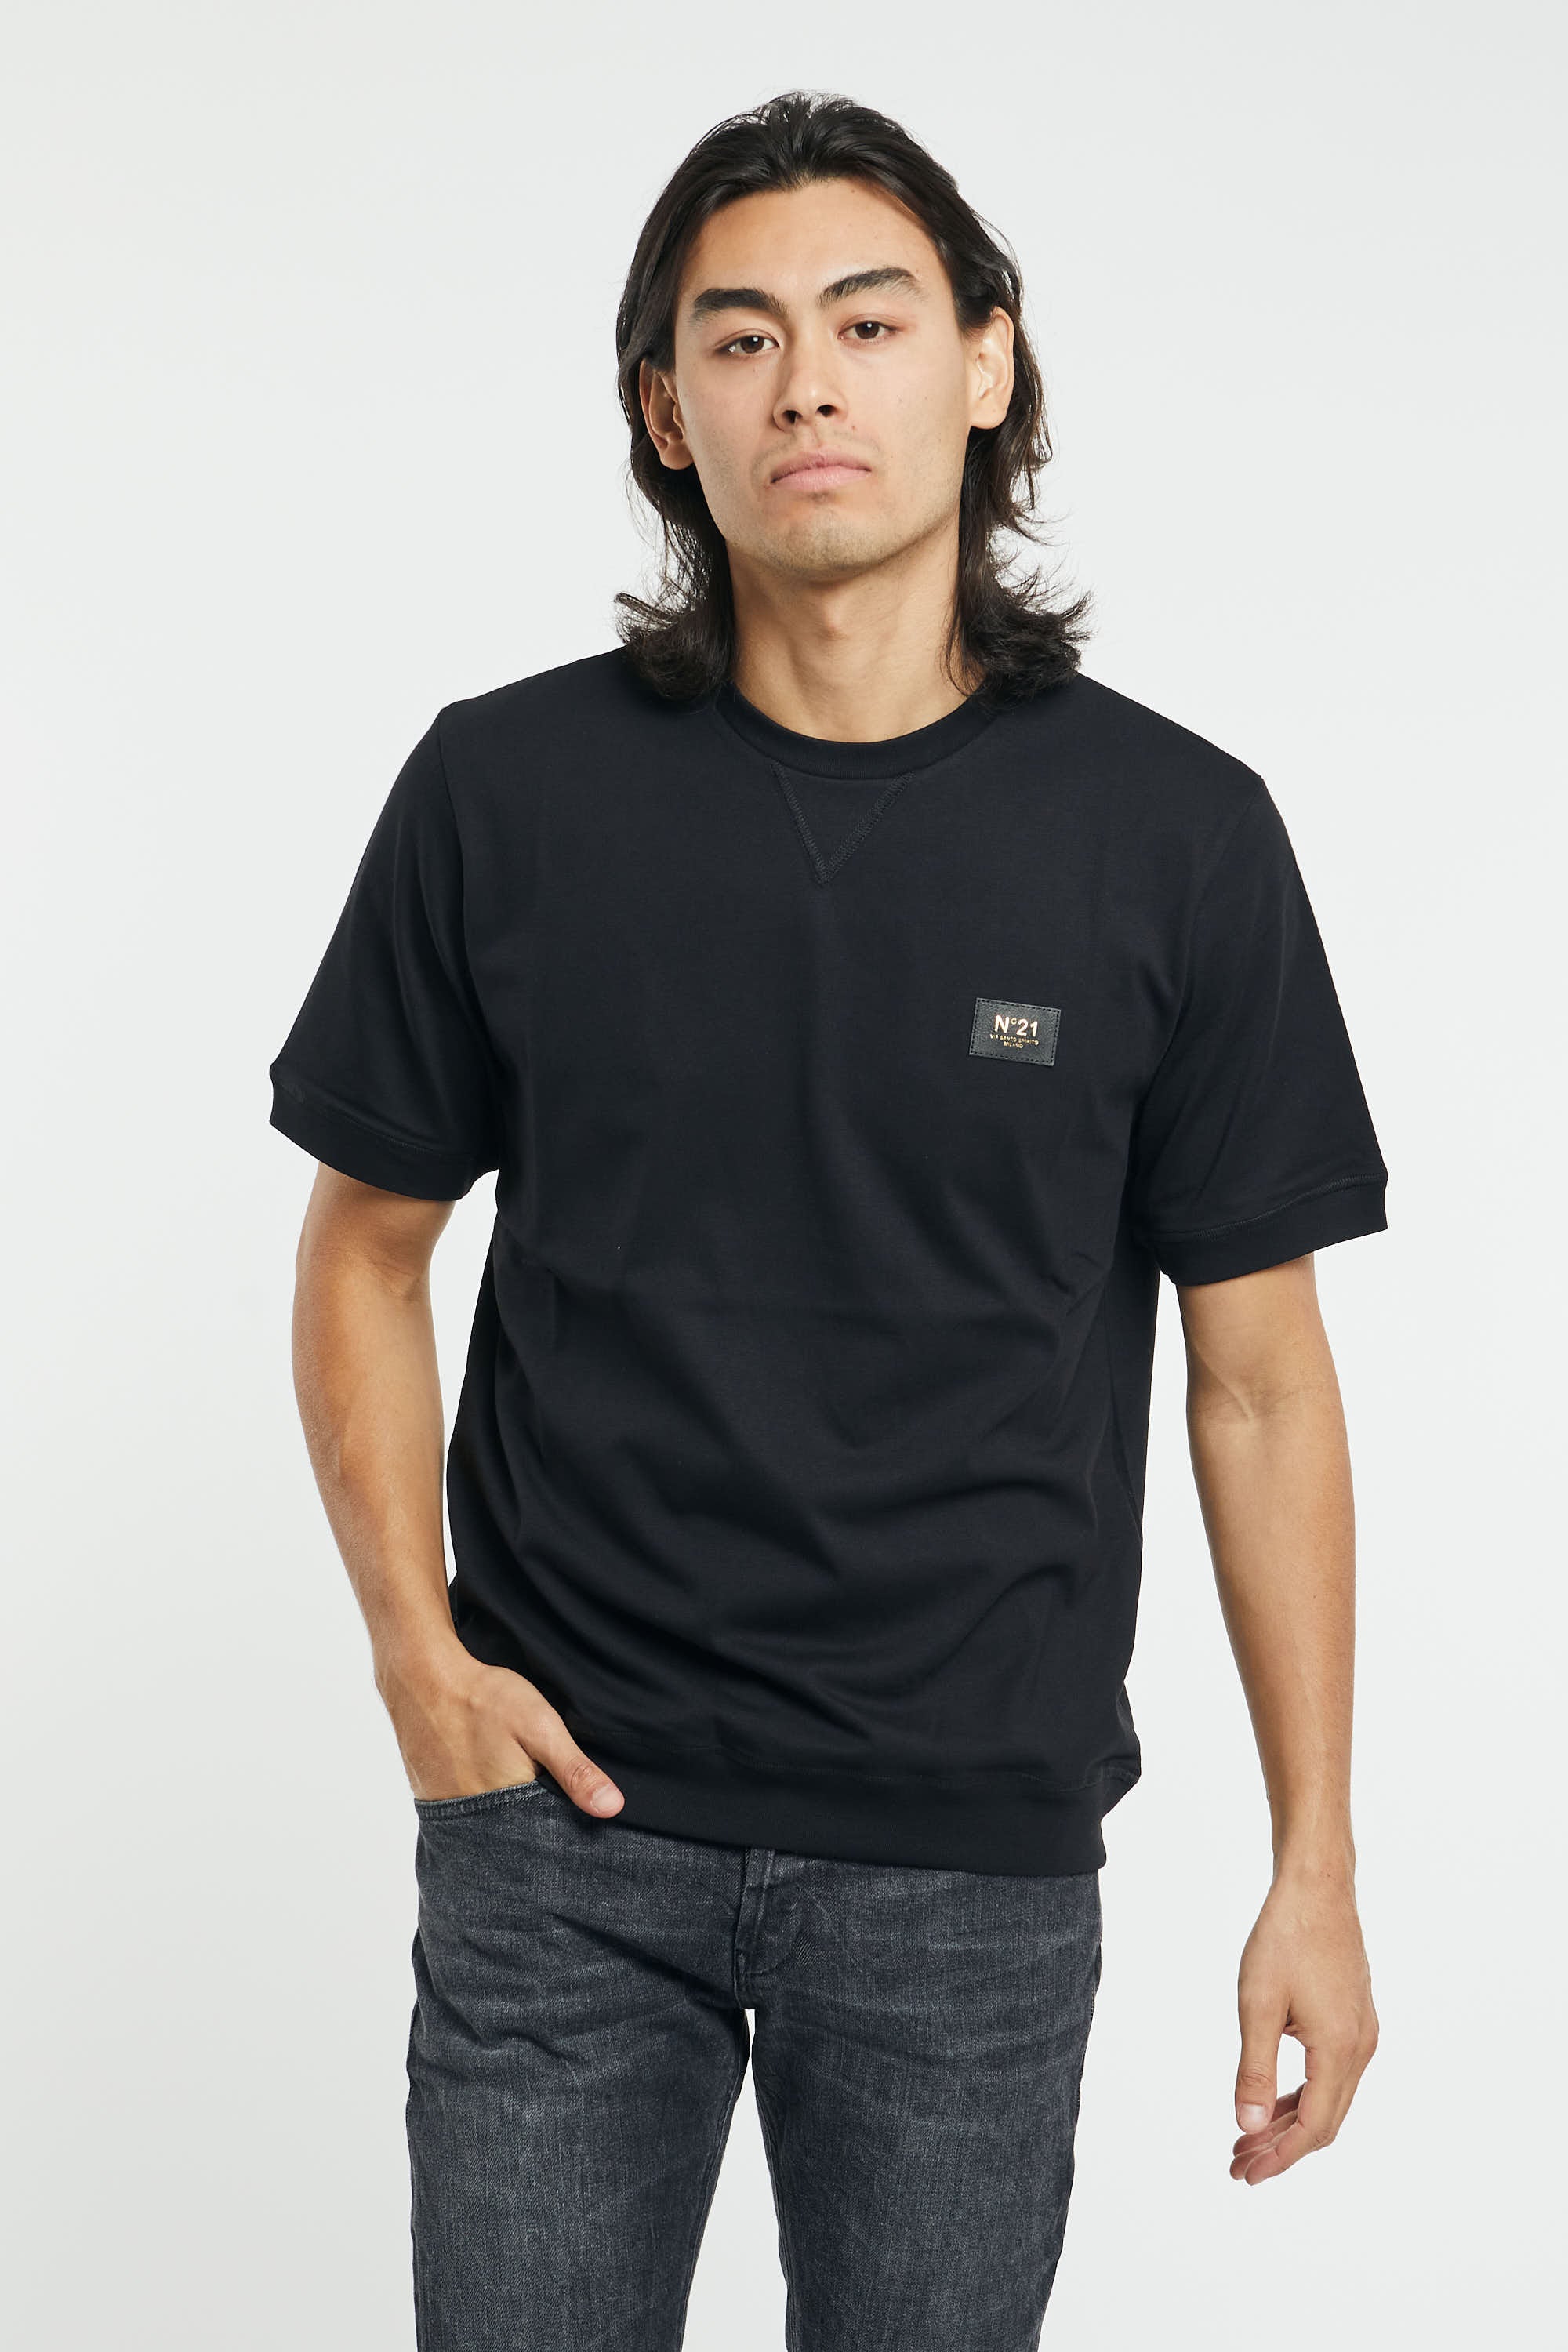 N°21 Cotton/Eco-leather T-Shirt Black - 4